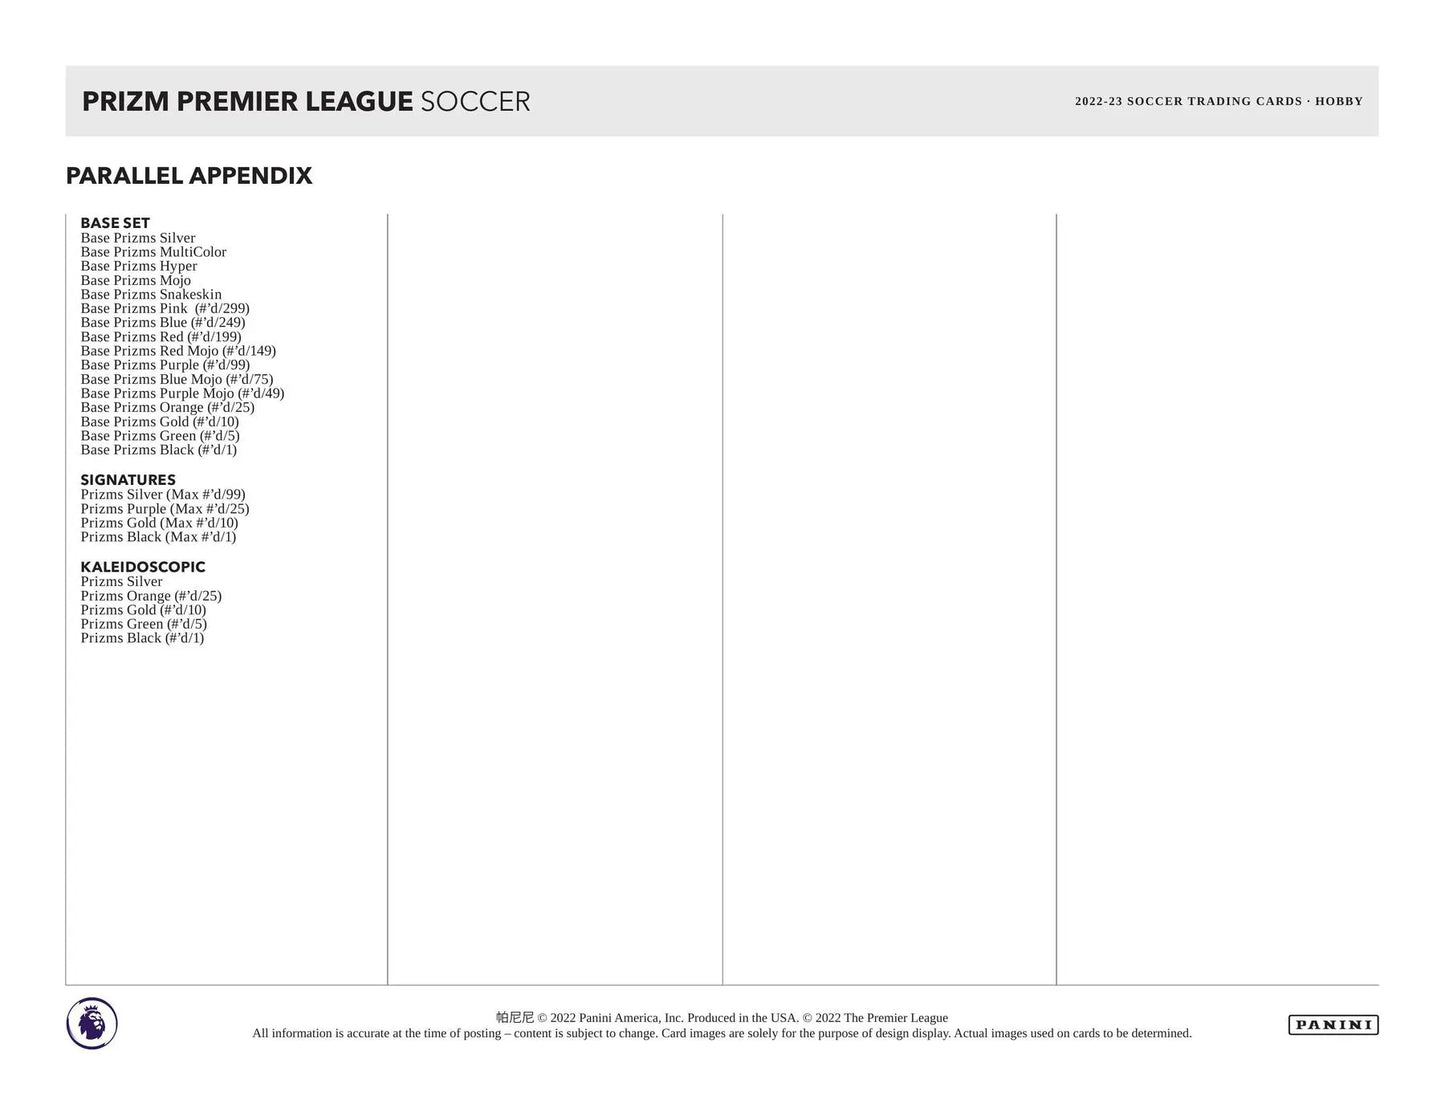 2022/23 Panini Prizm Premier League EPL Soccer Hobby 12-Box Case